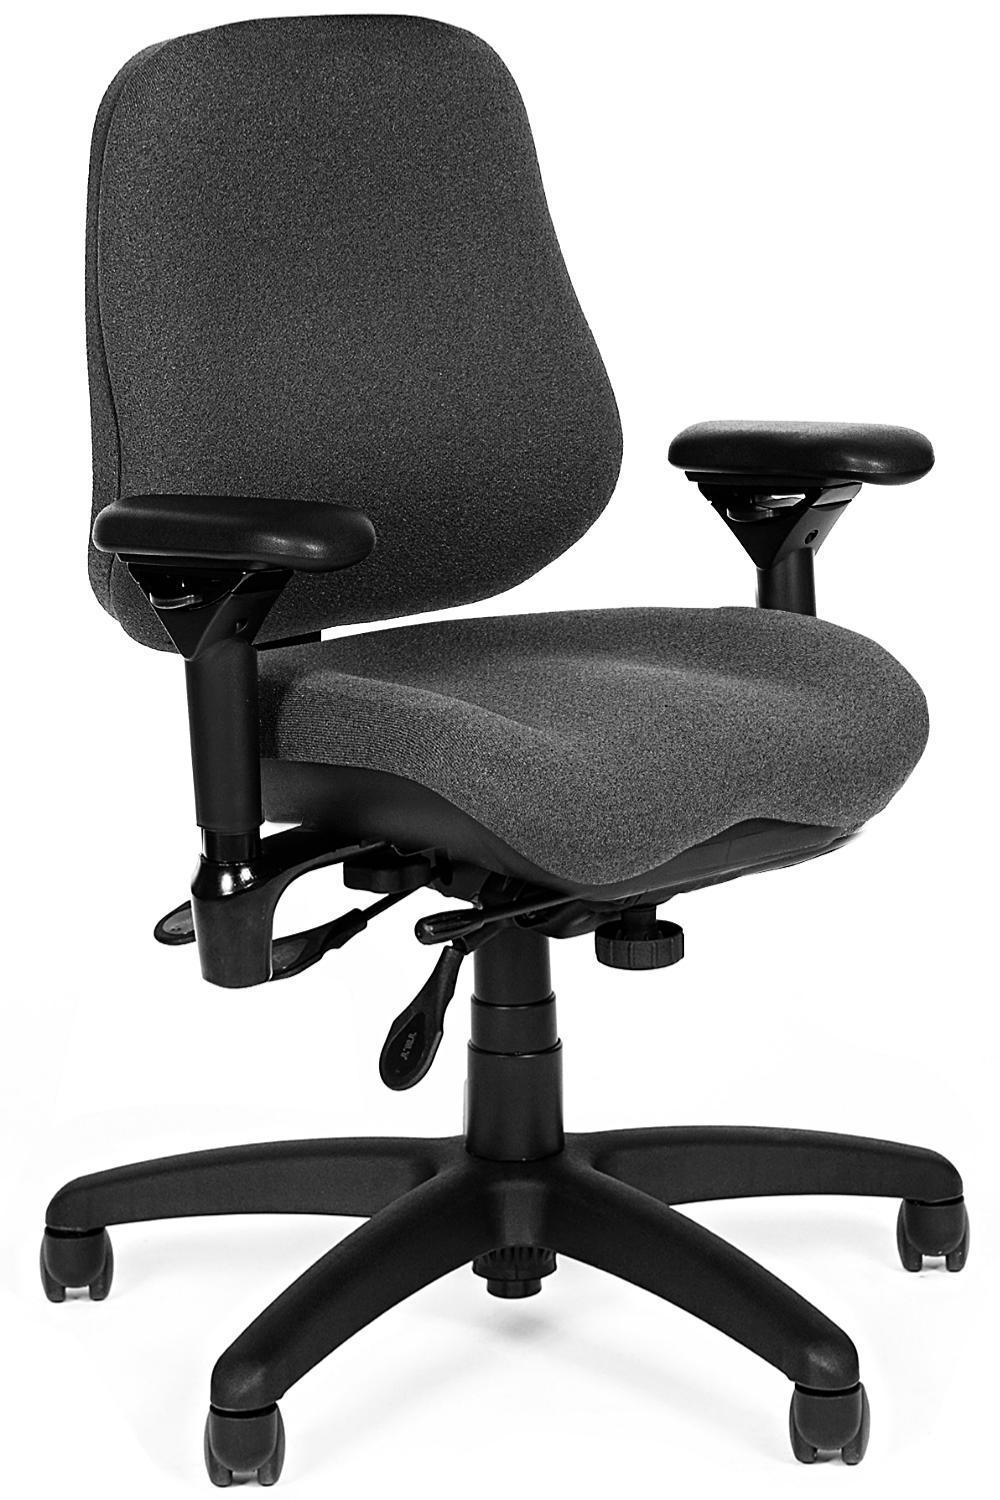 J2407 By Ergogenesis Office Chairs